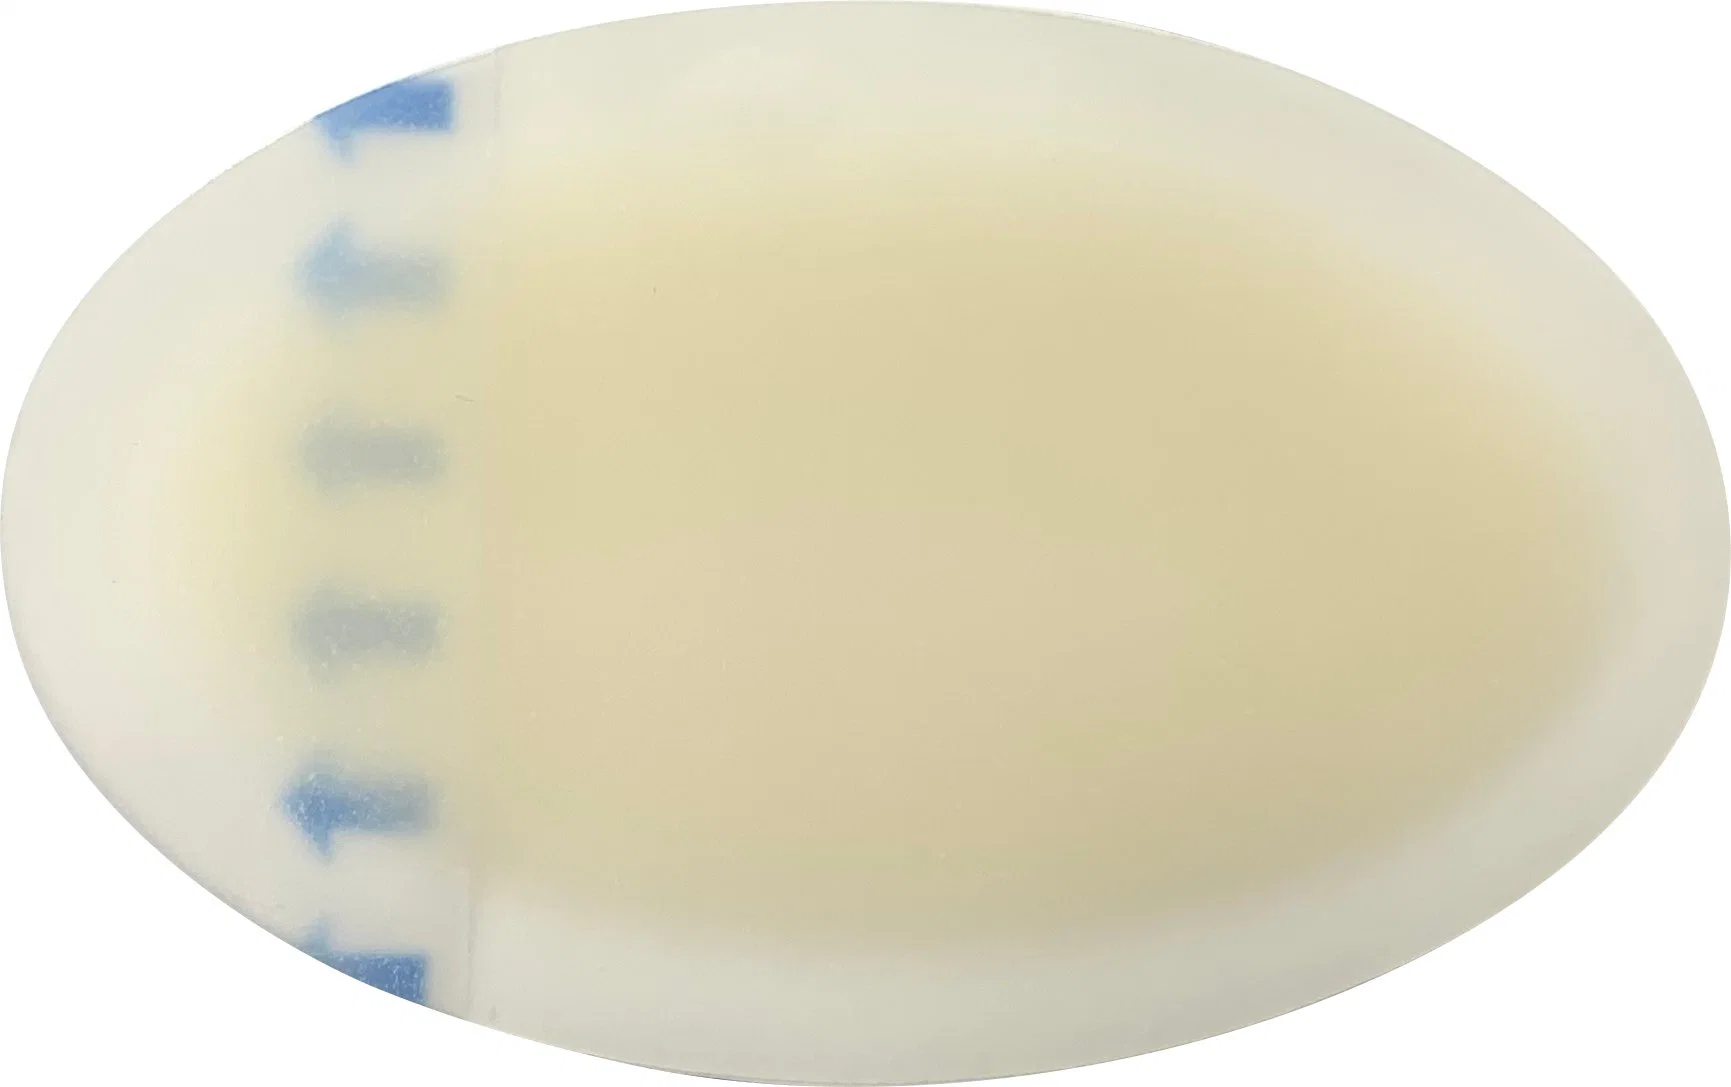 Mini herida Apósito hidrocoloide Blister Plaster/hidrocoloide vendaje adhesivo Ailebao Medical